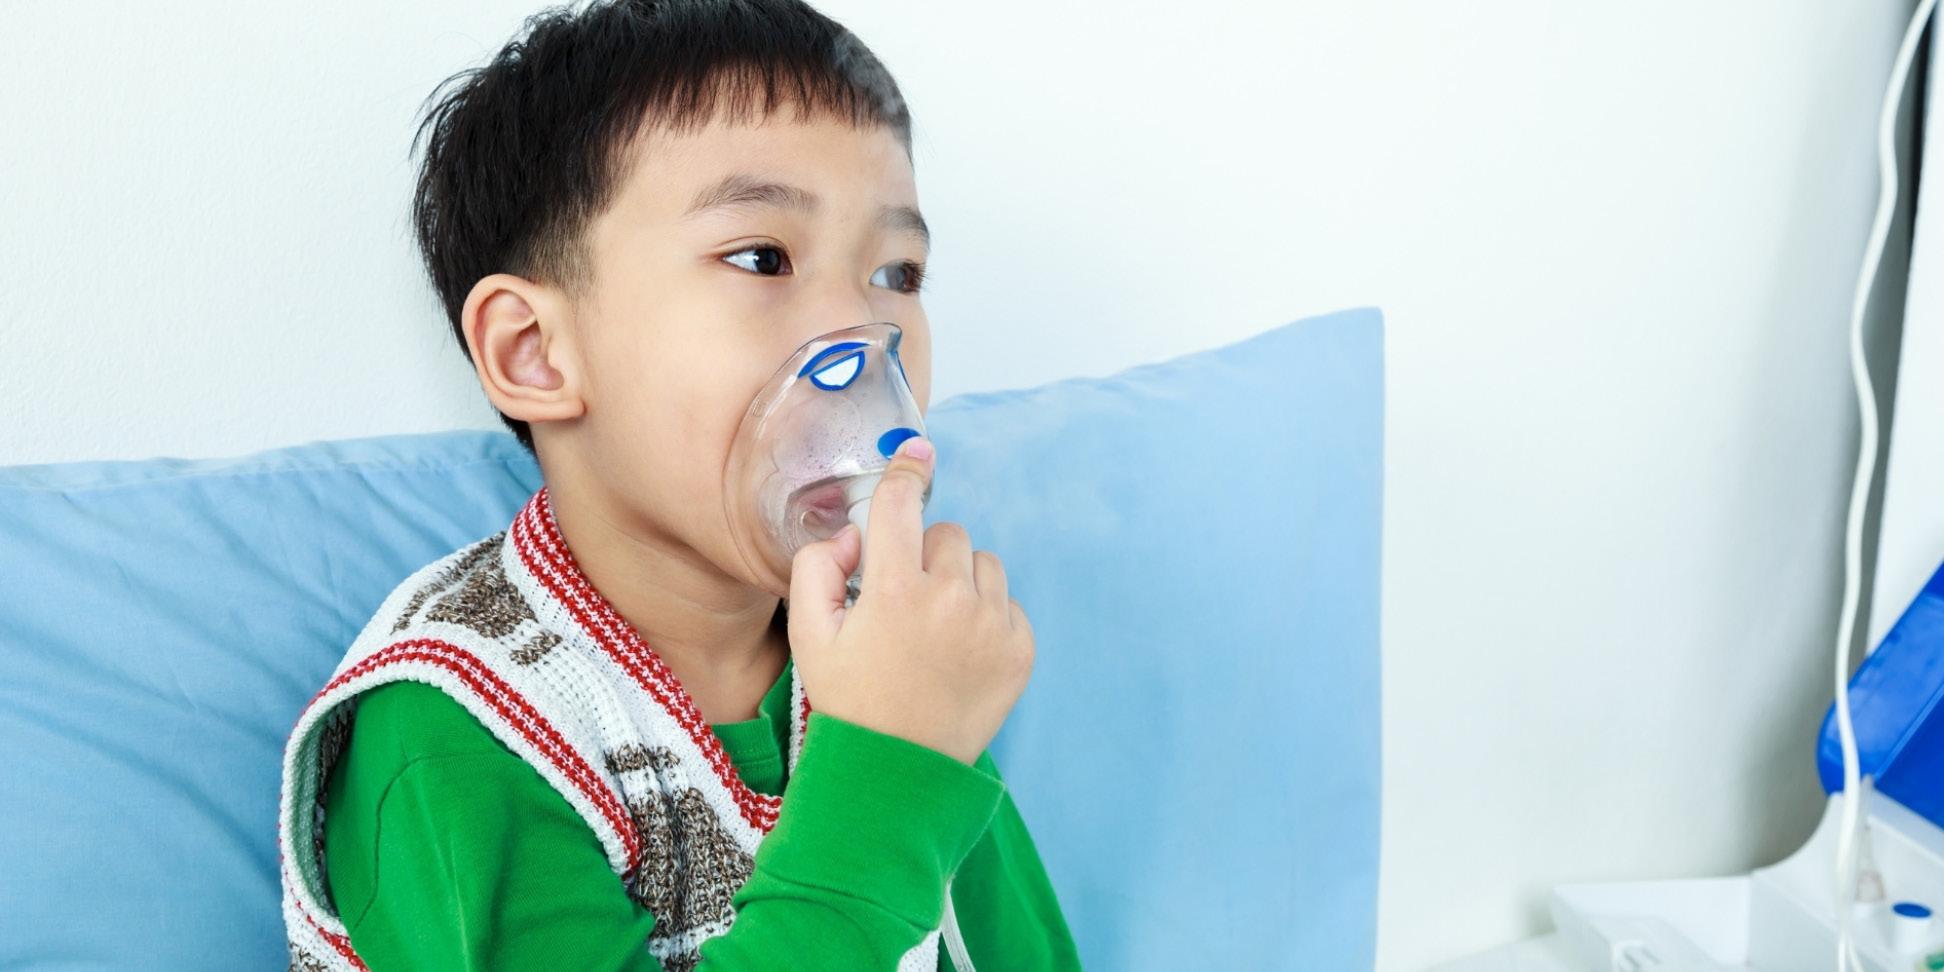 Child holding an oxygen mask